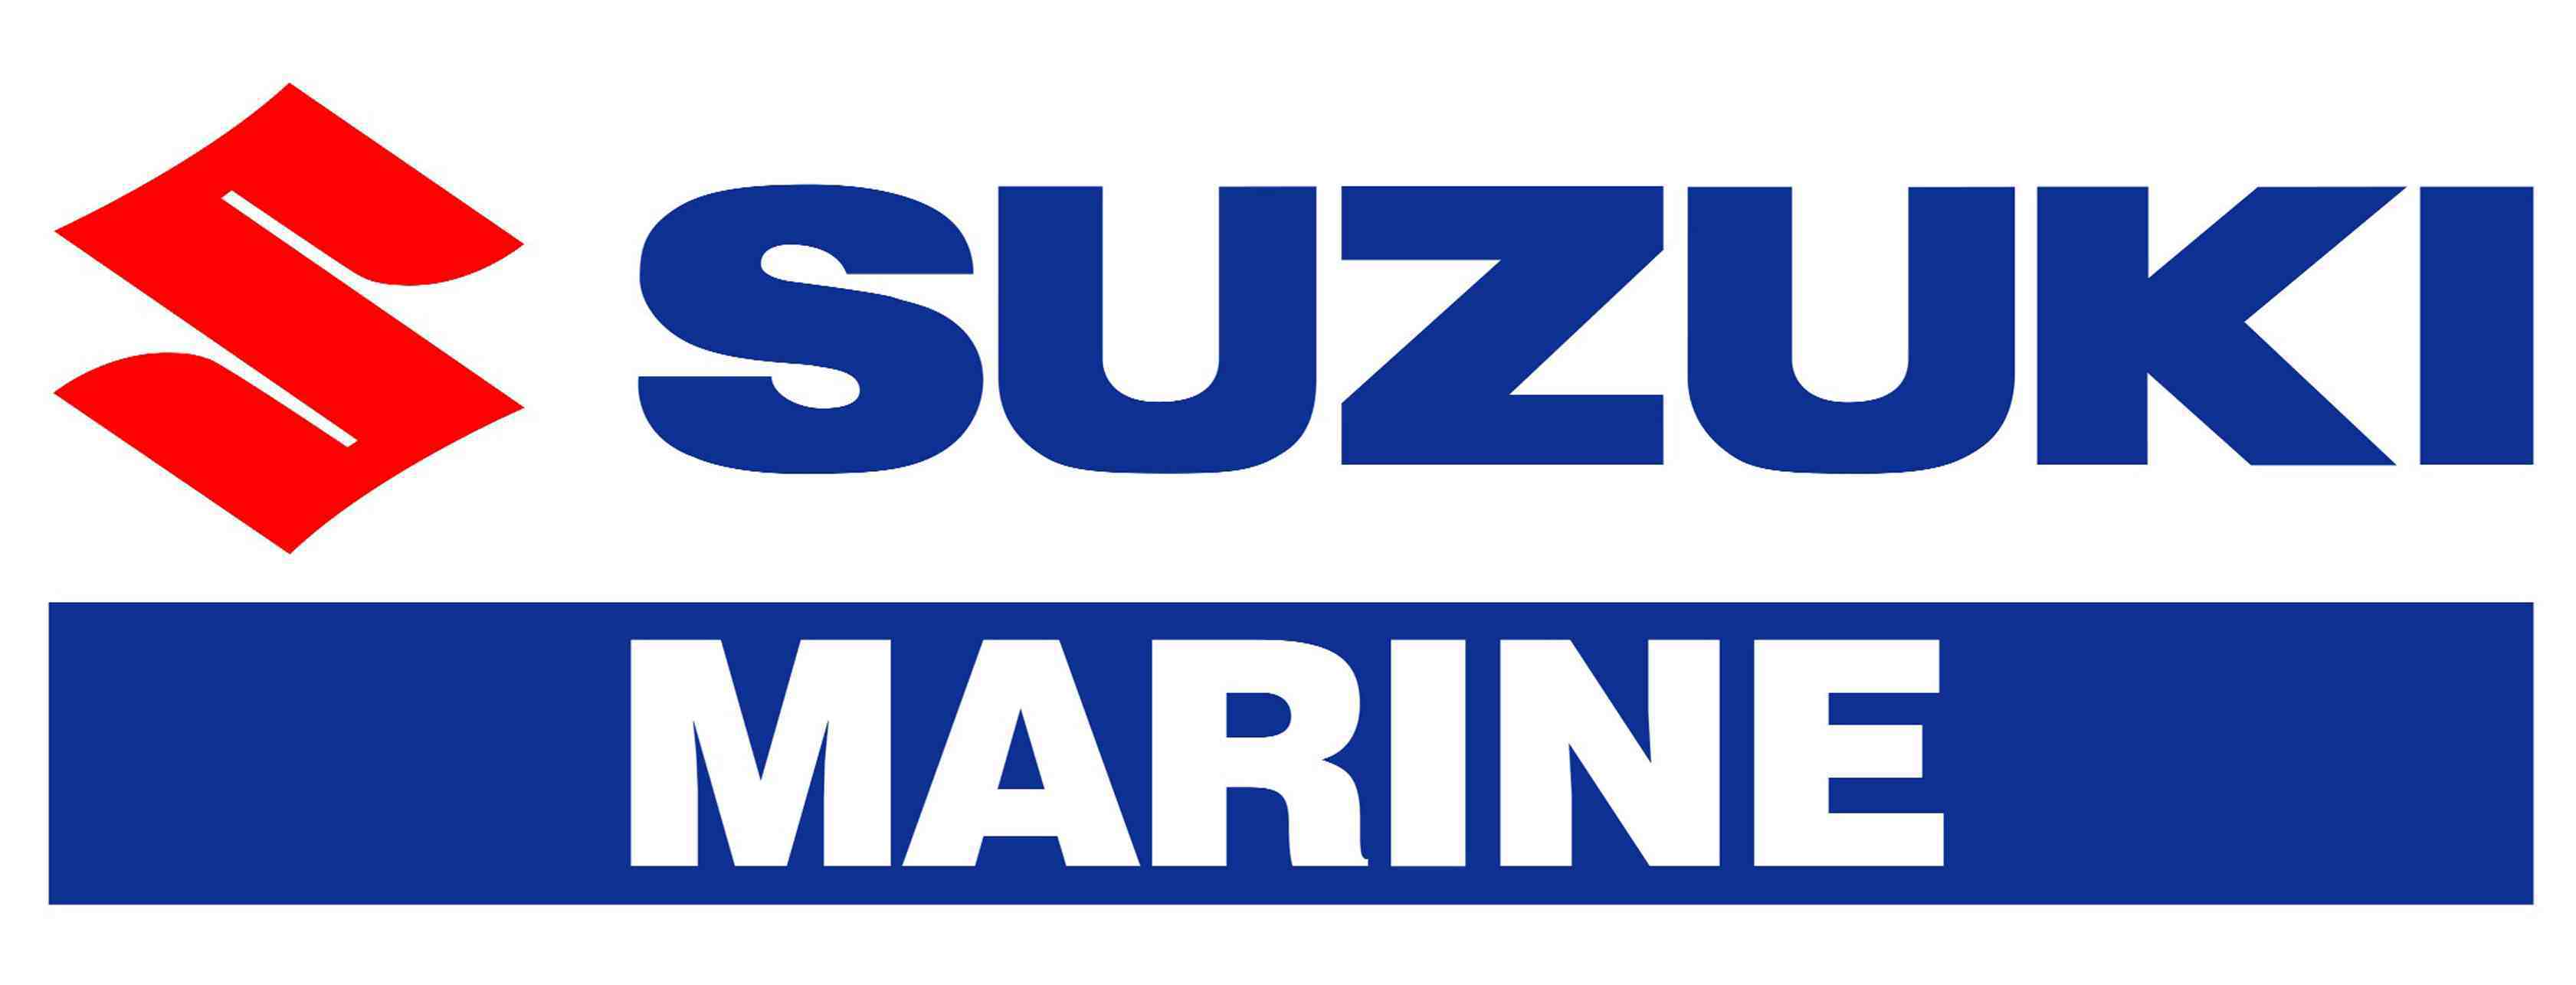 Suzuki_Marine.jpg